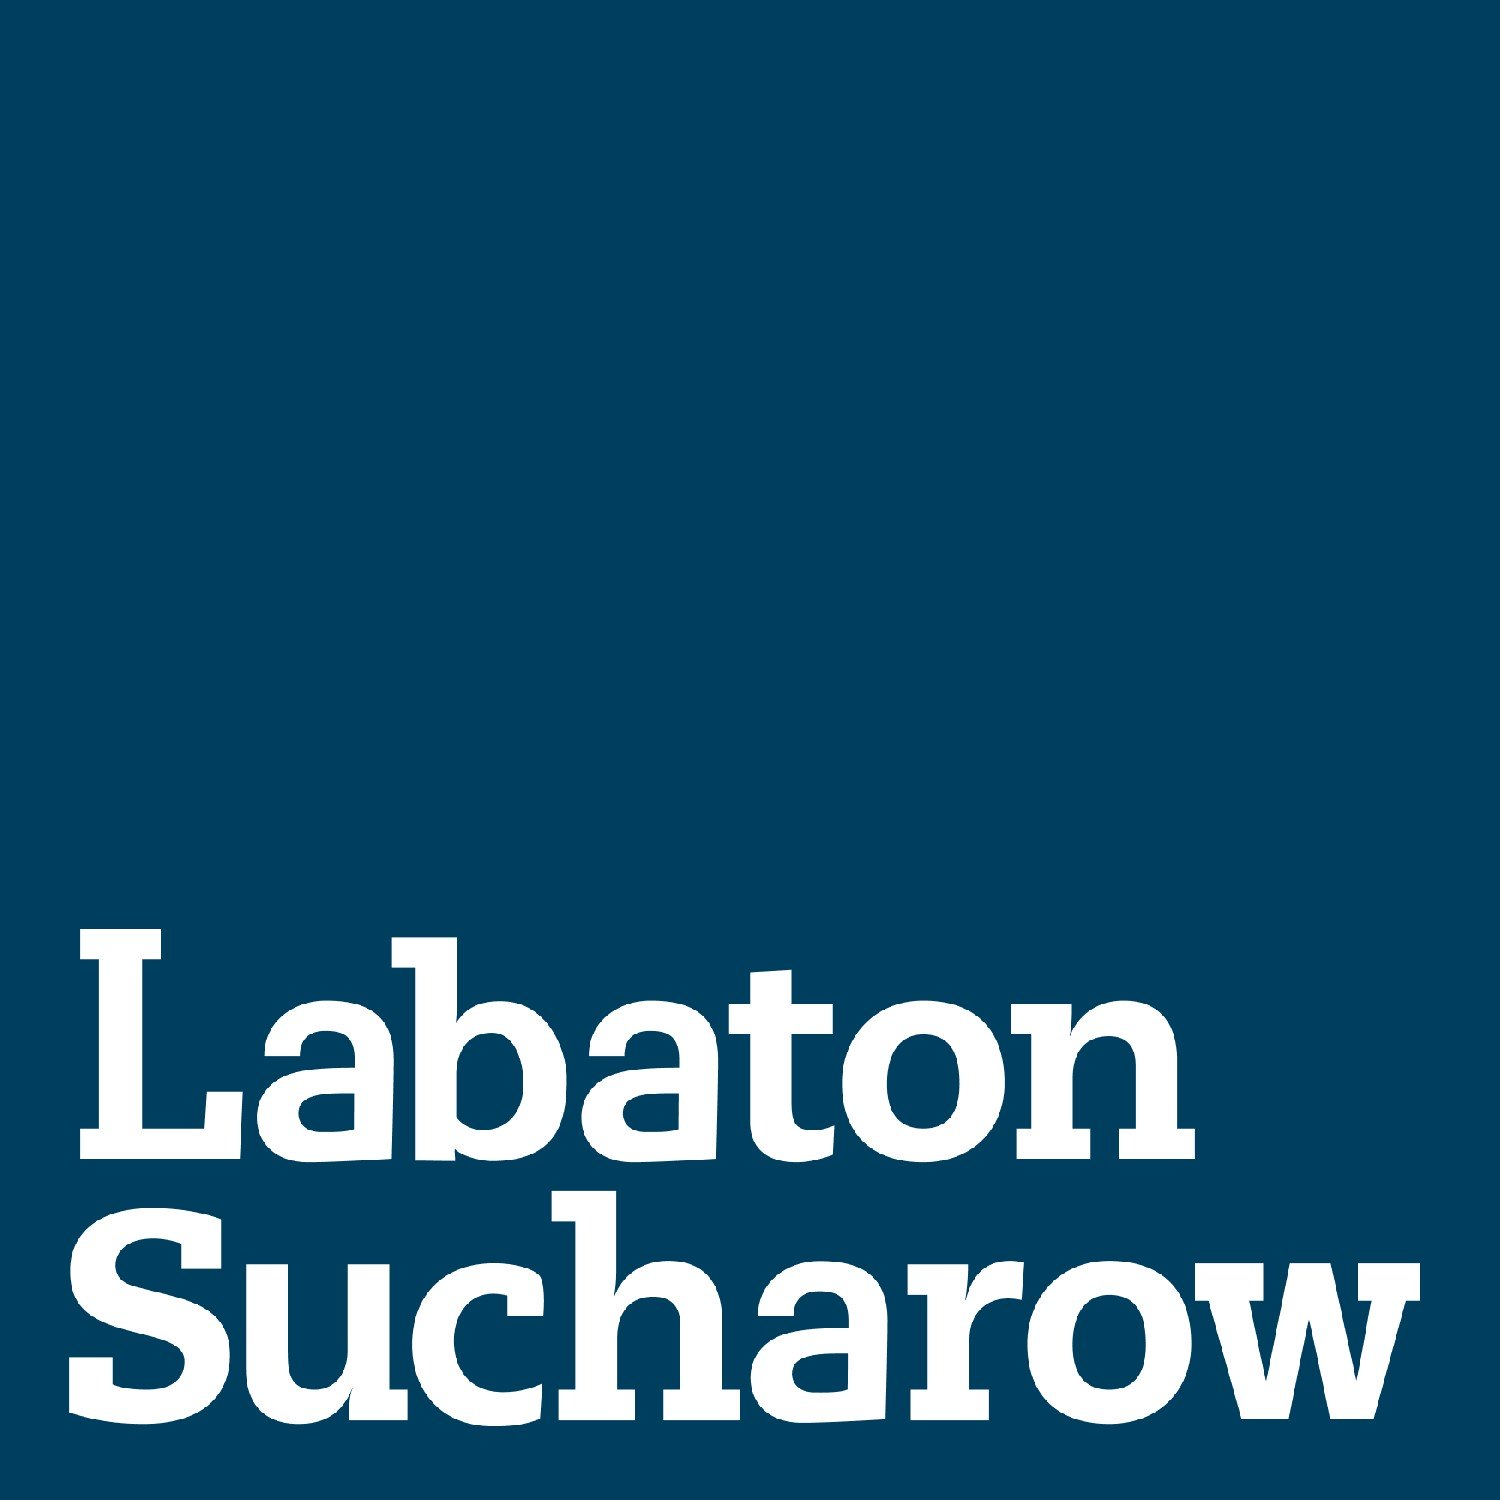 Labaton Sucharow LLP, Monday, June 1, 2020, Press release picture